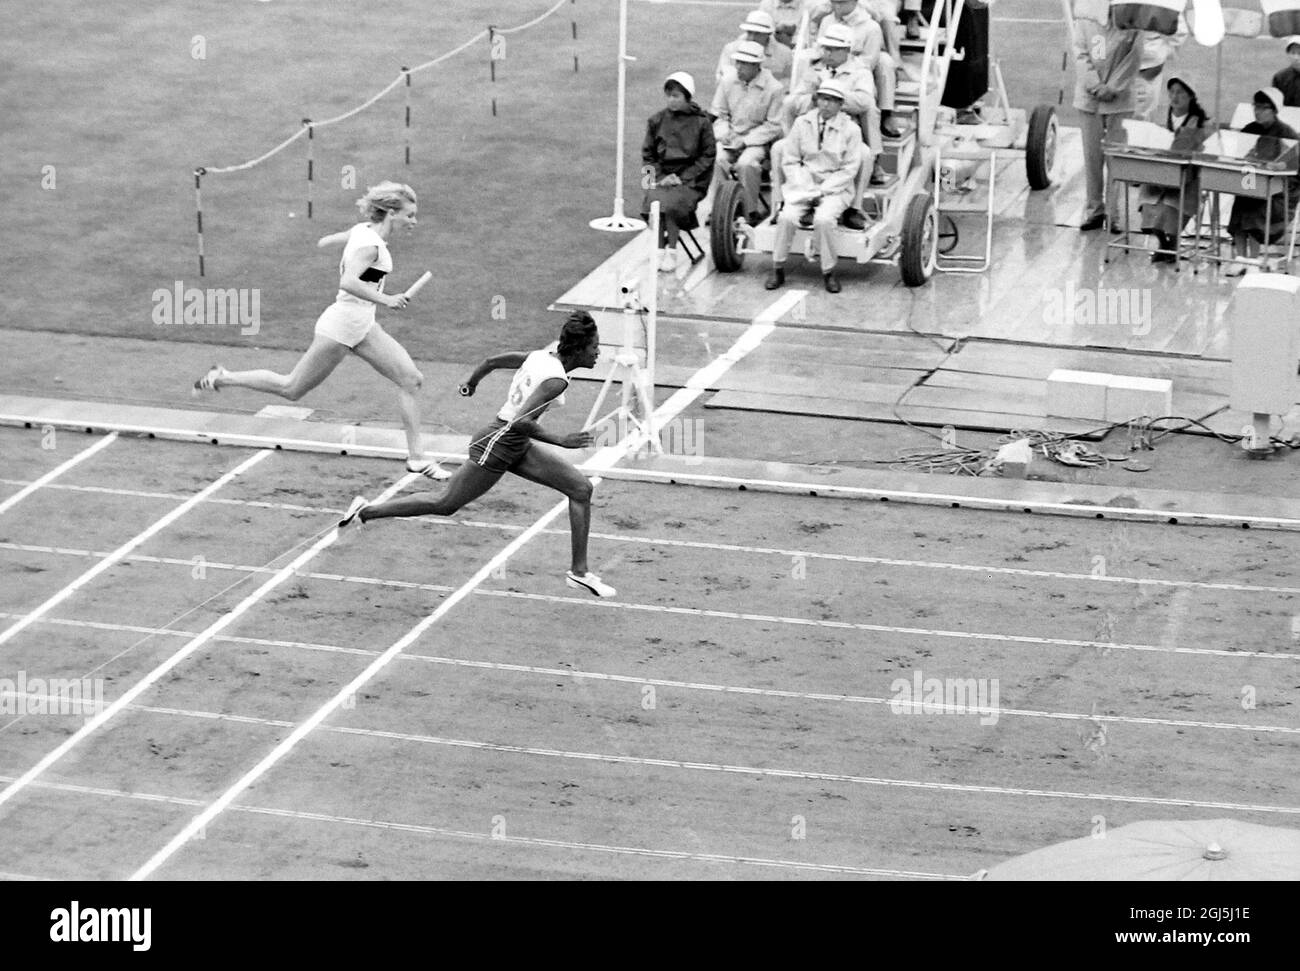 OLYMPISCHE SPIELE, OLYMPISCHE SPORTSPIELE - XVIII. OLYMPIADE IN TOKIO, JAPAN - RUNNING OLYMPICS WOMEN 4X100 US MEMBER CROSSES LINE WIN HEAT ; 21. OKTOBER 1964 Stockfoto